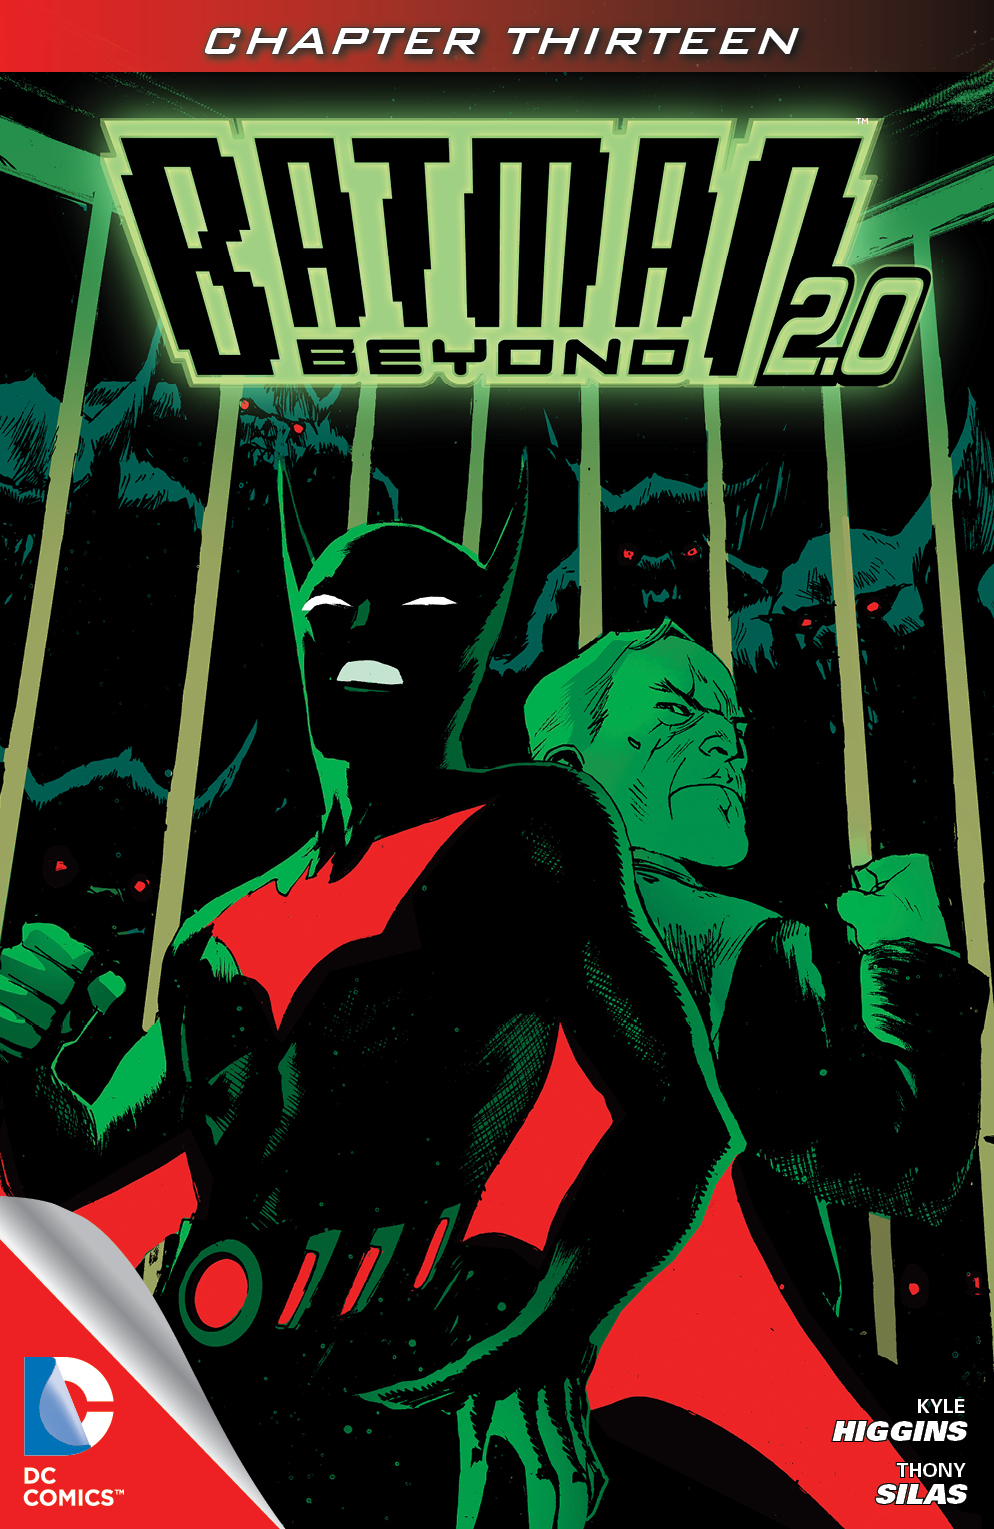 Batman Beyond 2.0 #13 preview images